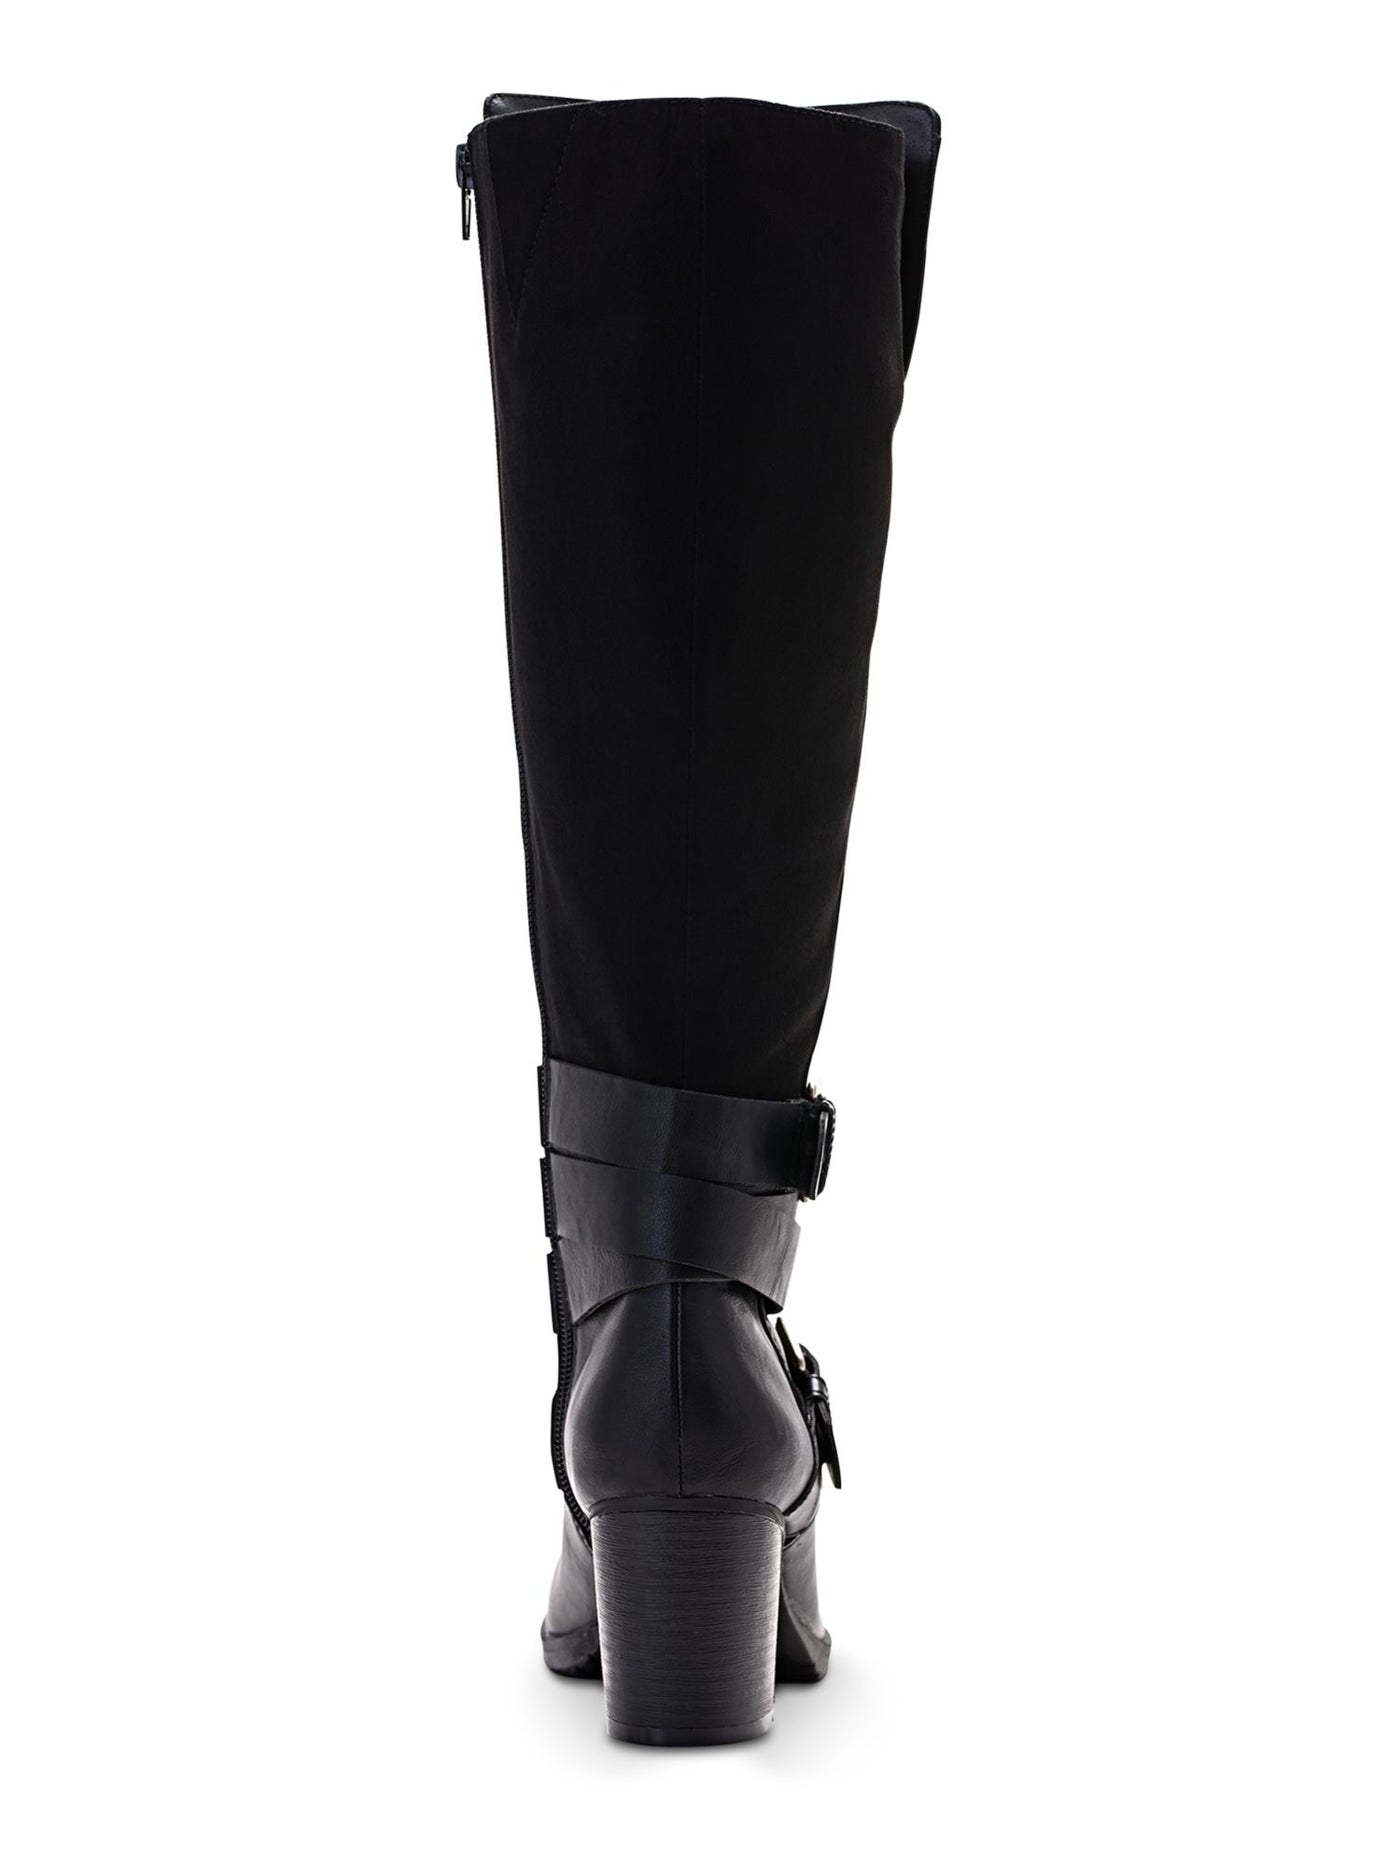 STYLE & COMPANY Womens Black Buckle Accent Slip Resistant Comfort Jomaris Round Toe Block Heel Zip-Up Riding Boot 5 M